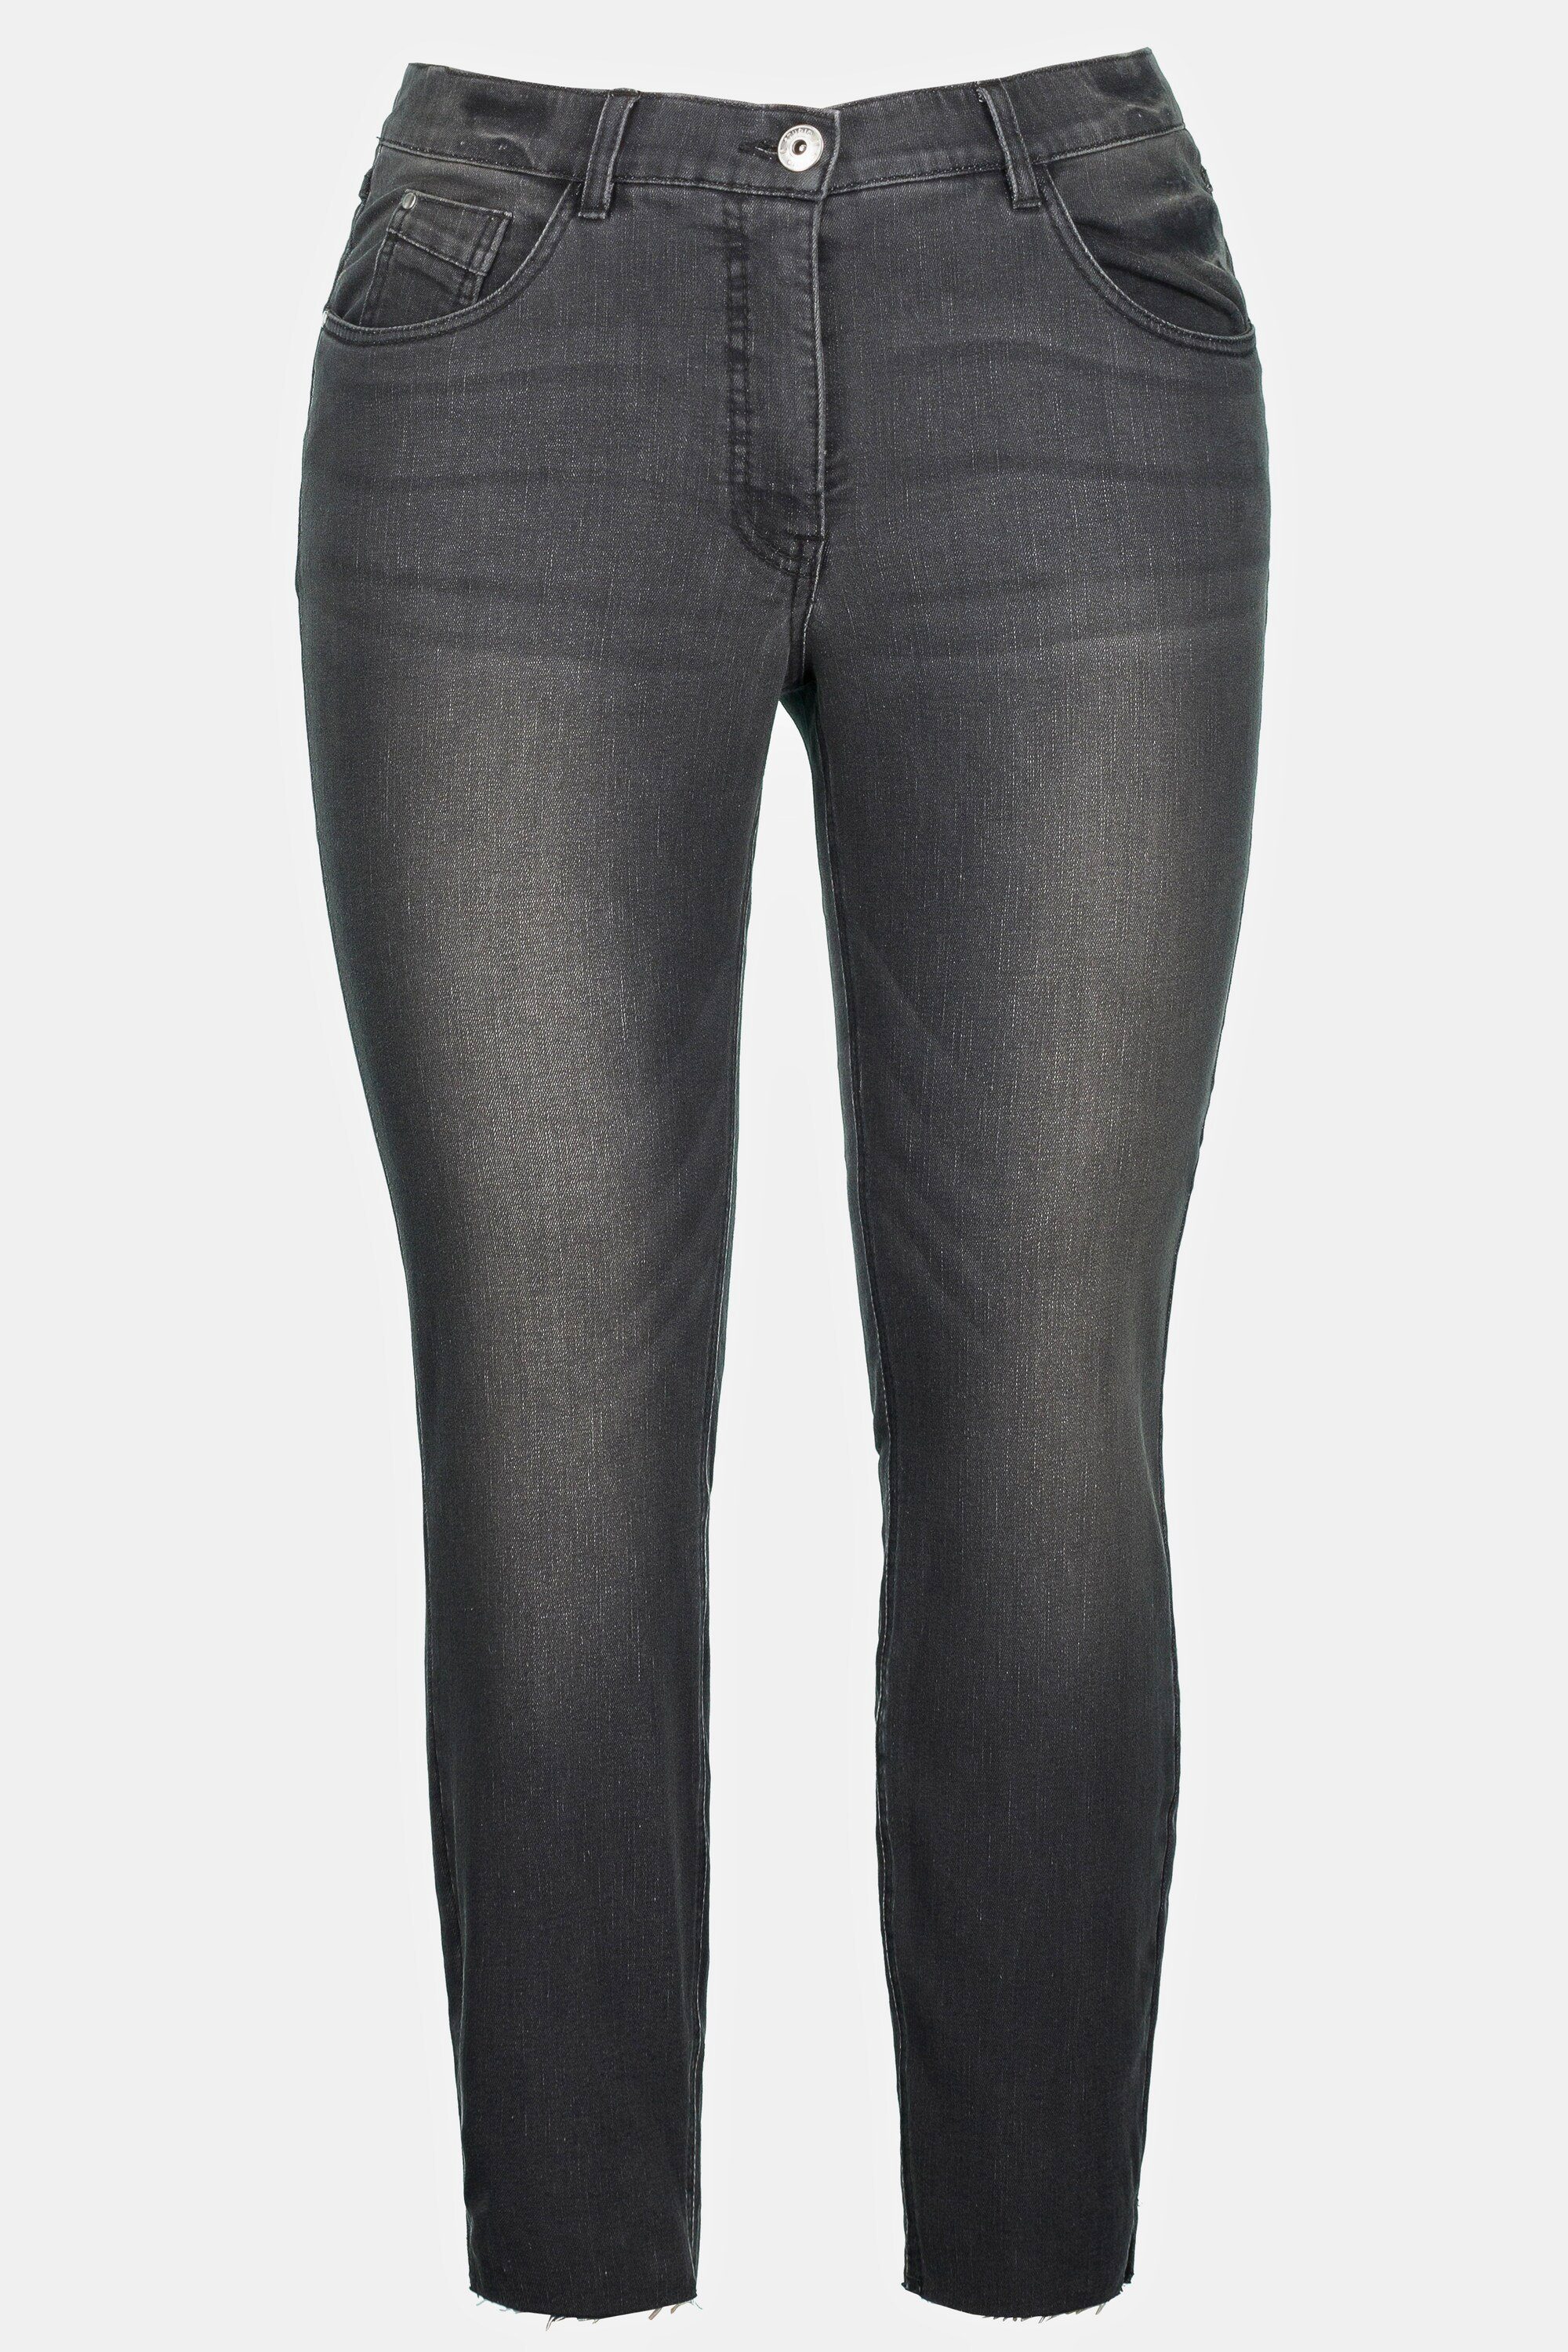 Studio Untold Schlupfhose Skinny Jeans schmal denim 5-Pocket Fransensaum grey Schlitz